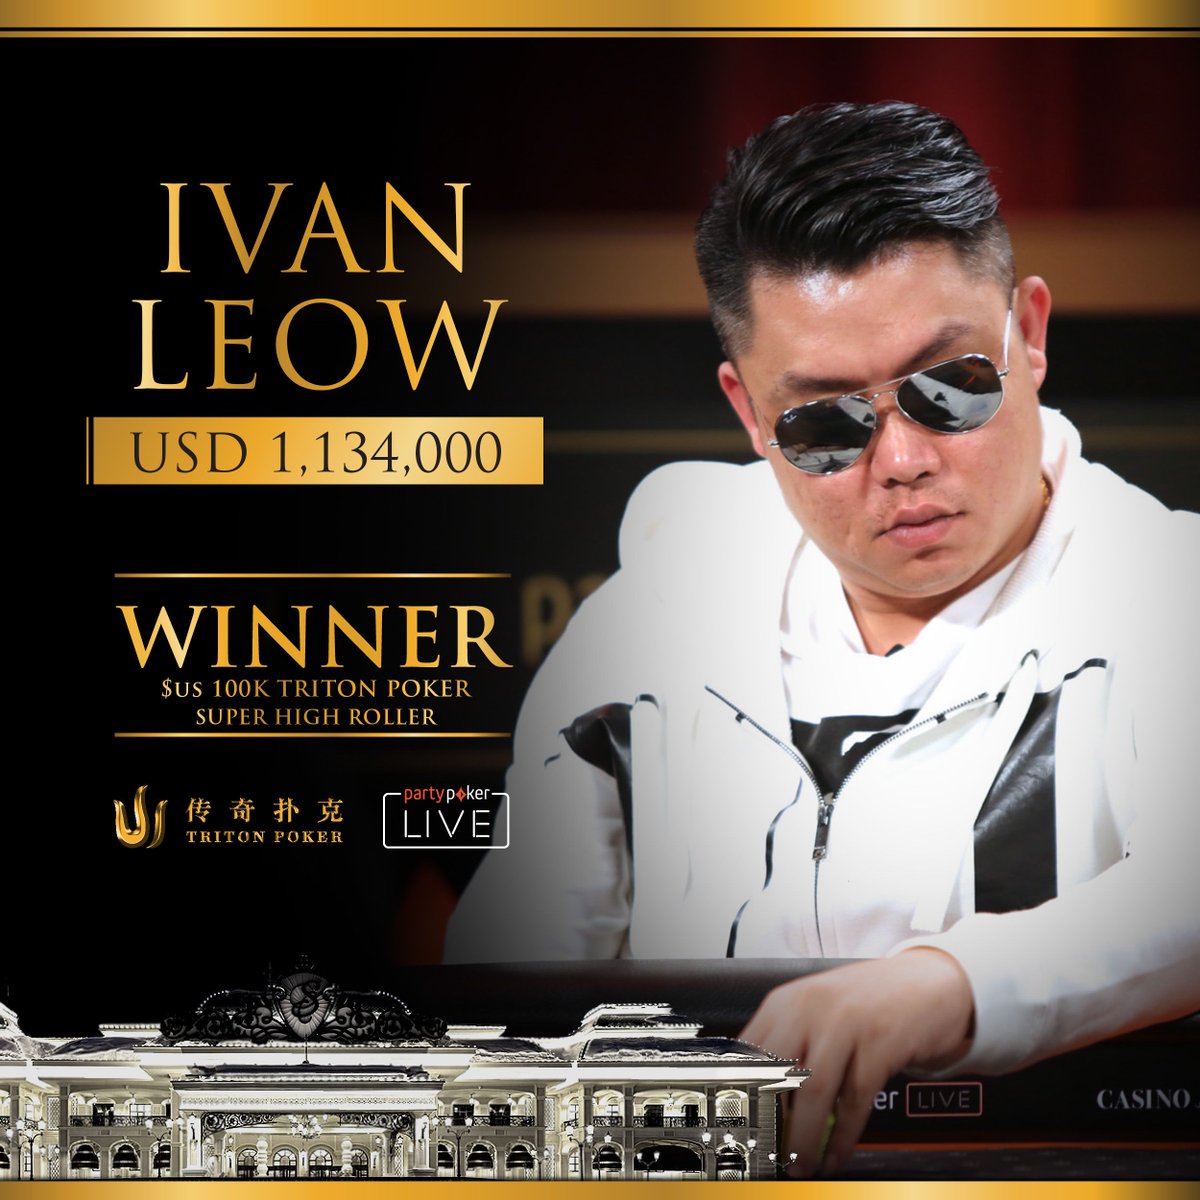  Ivan Leow Triton Poker Sochi.